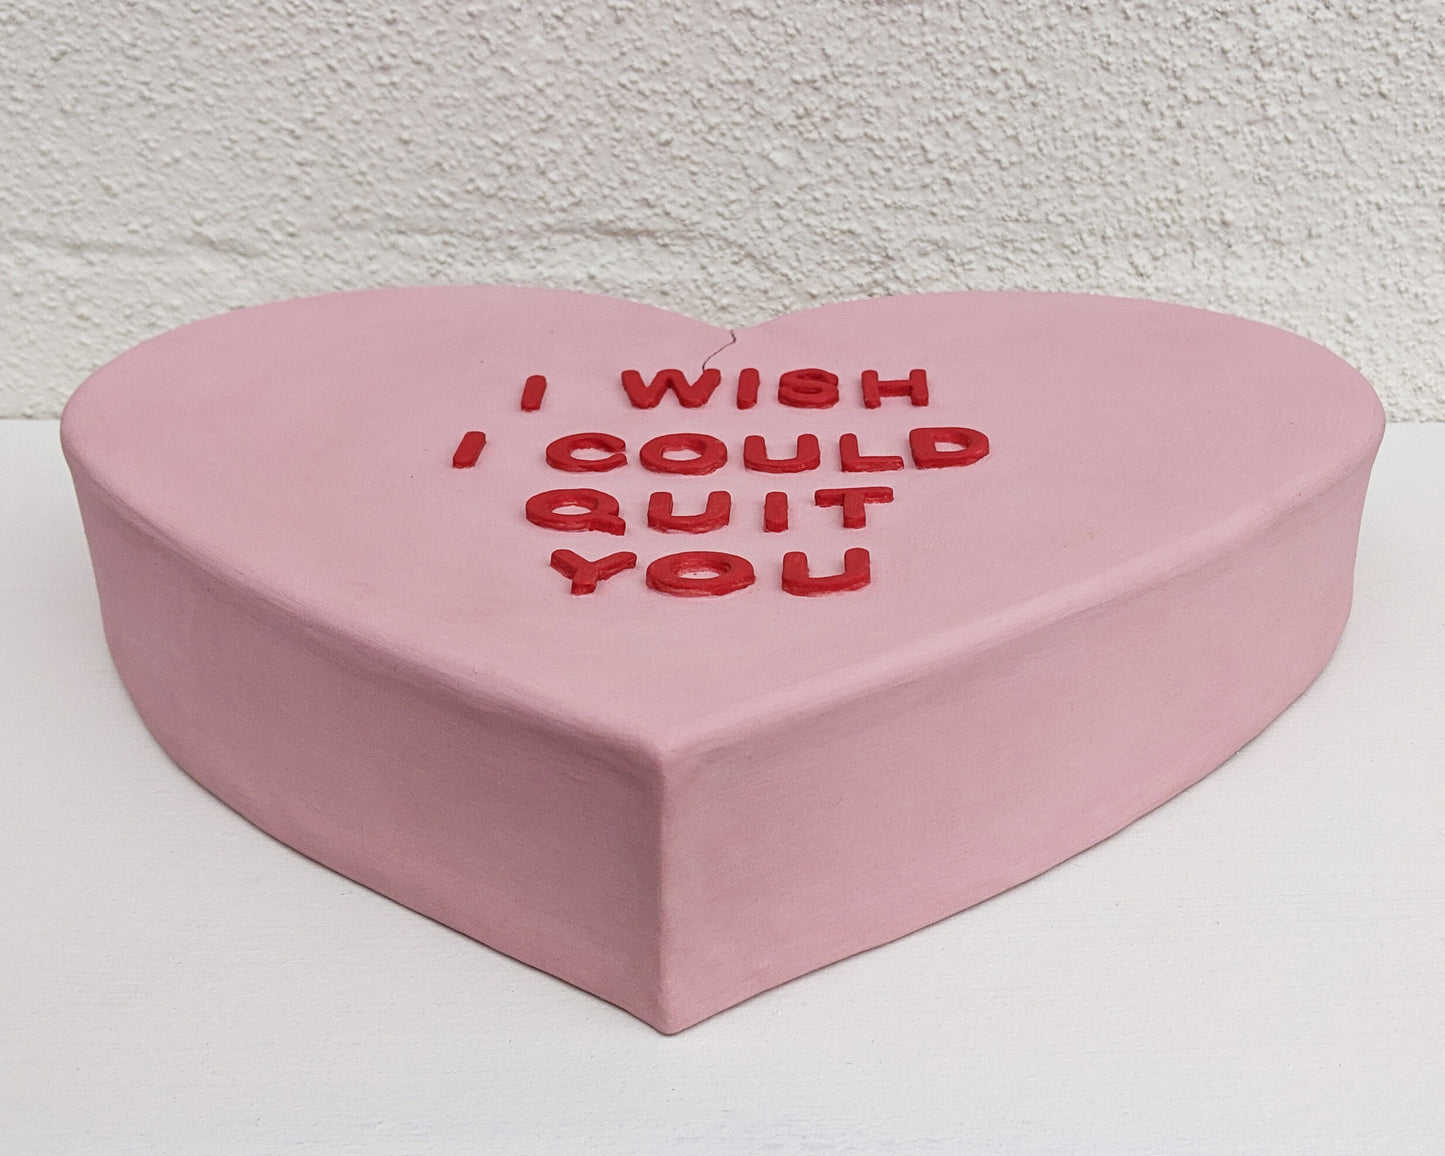 "Broken Heart/ I WISH I COULD QUIT YOU" Porcelain Jumbo Conversational Heart